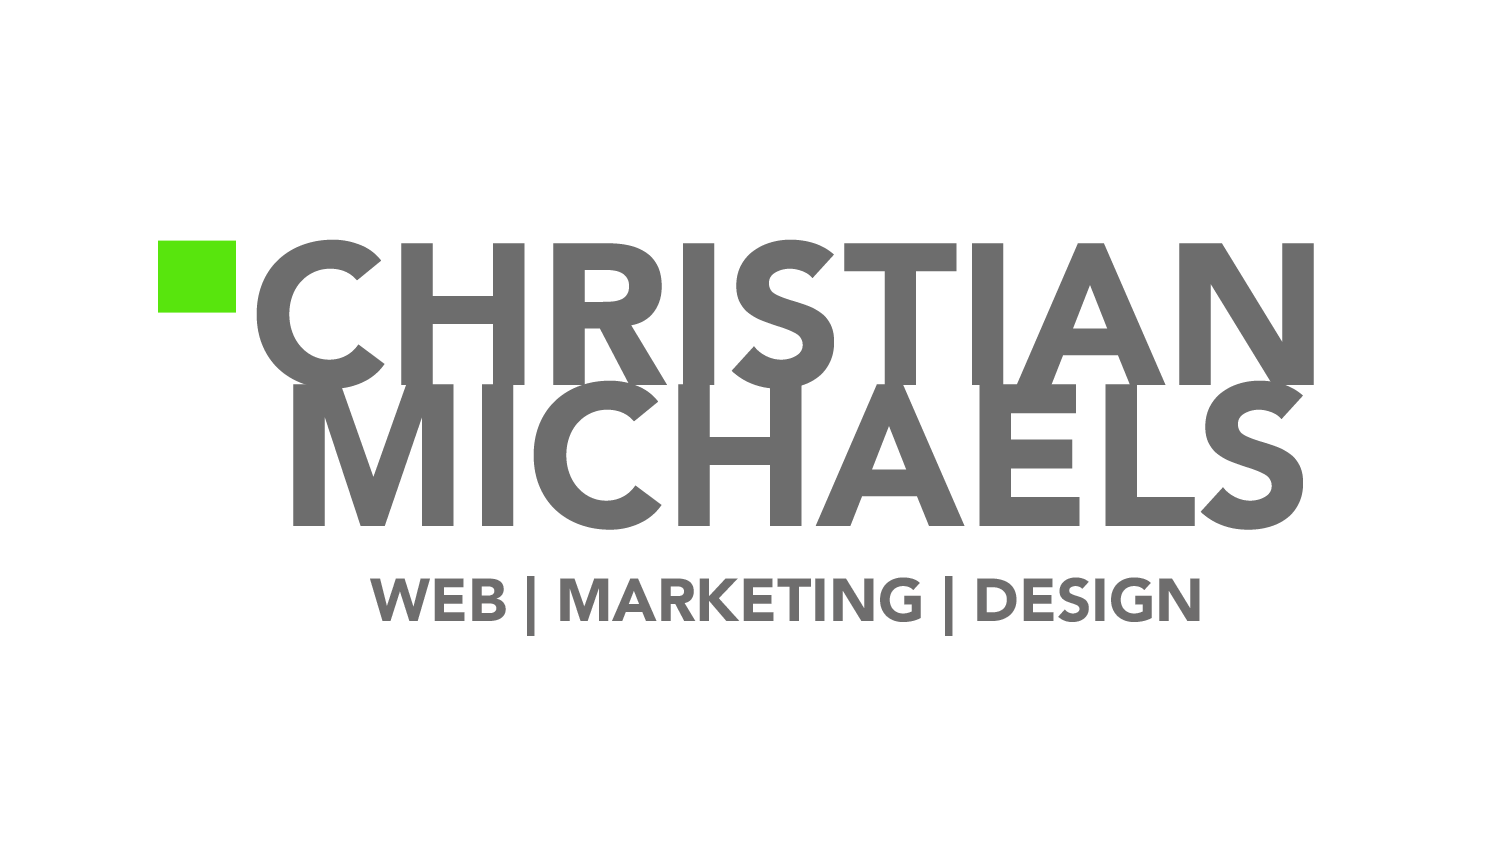 Michaels Logo - Christian Michaels logo hi res - The Great British Expo